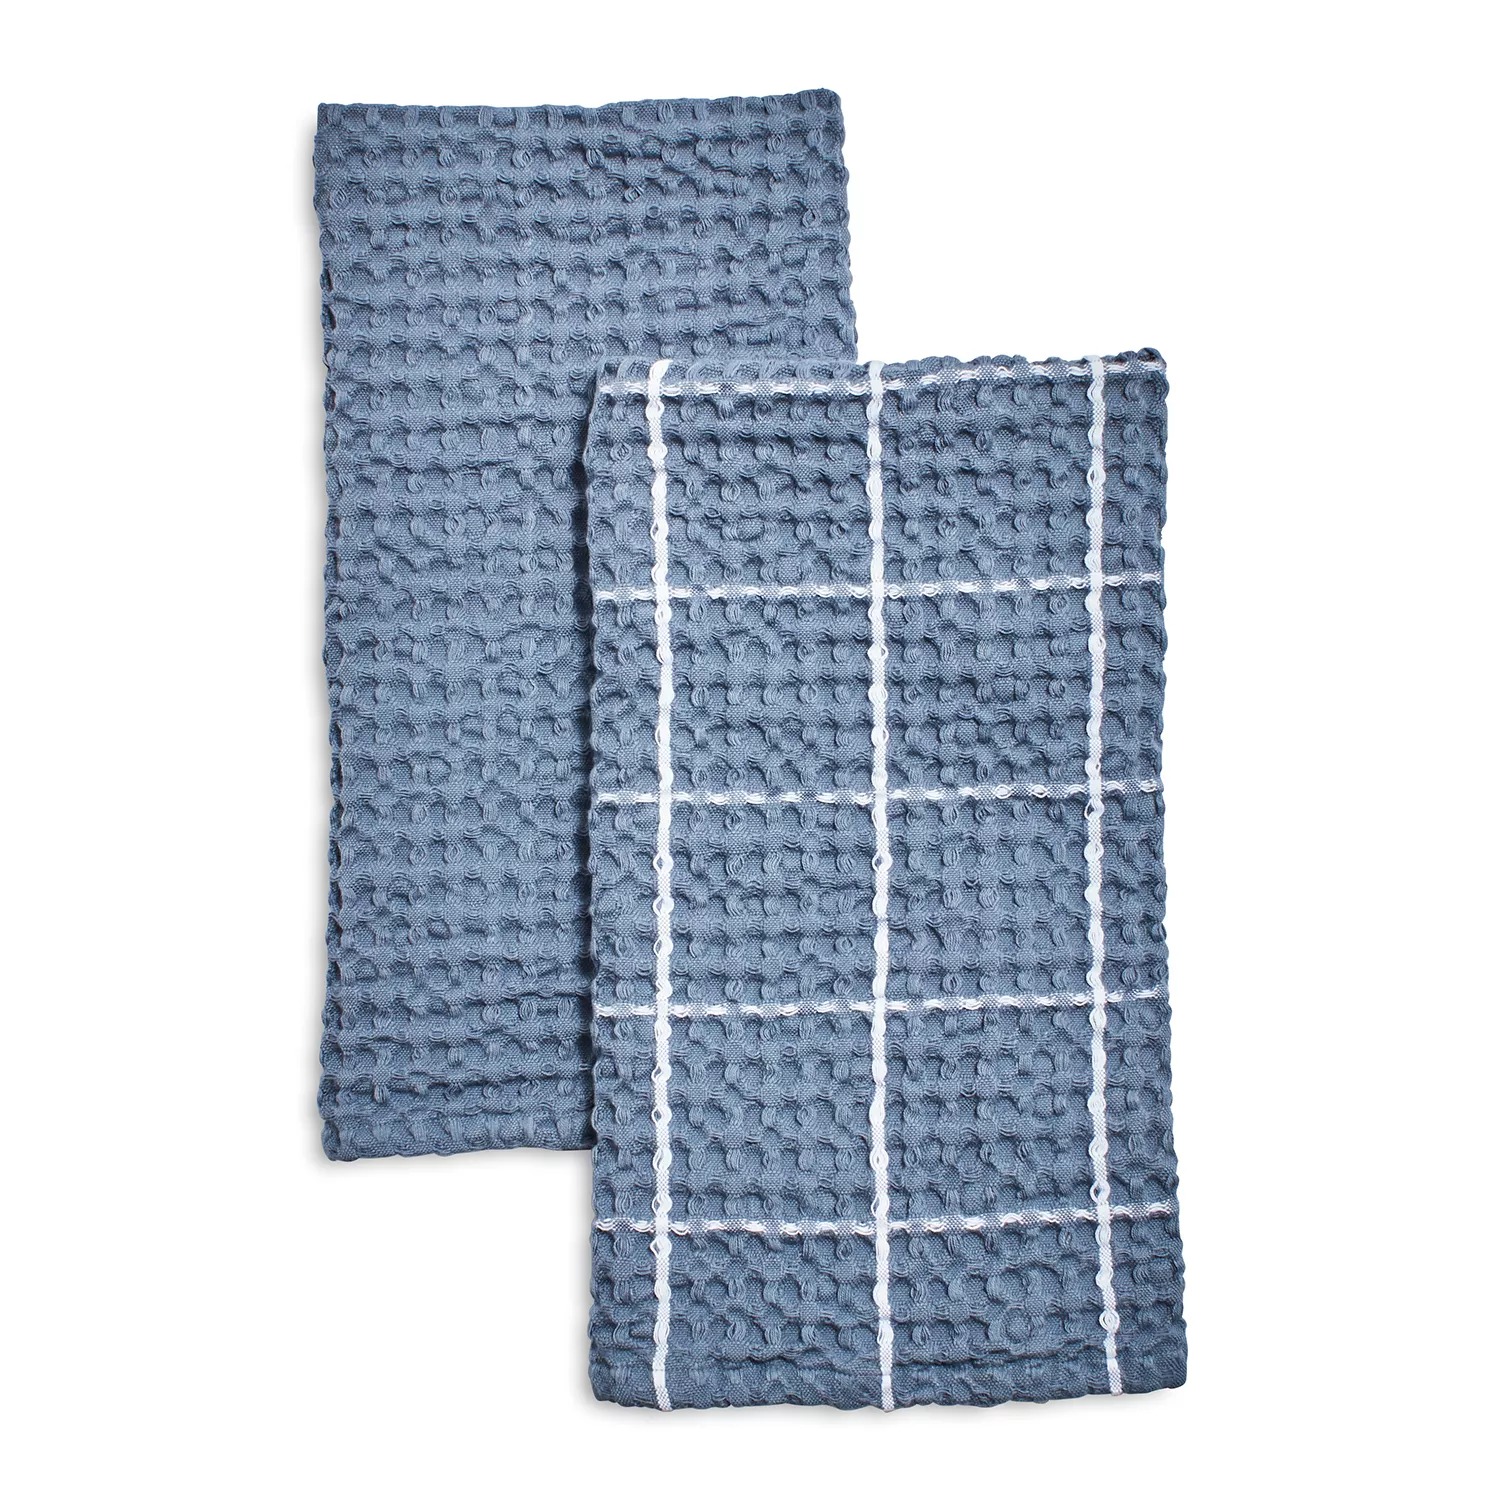 WAFFLE KITCHEN TOWELS SET OF 6, Blue, 18''x28'' – Chardin Home